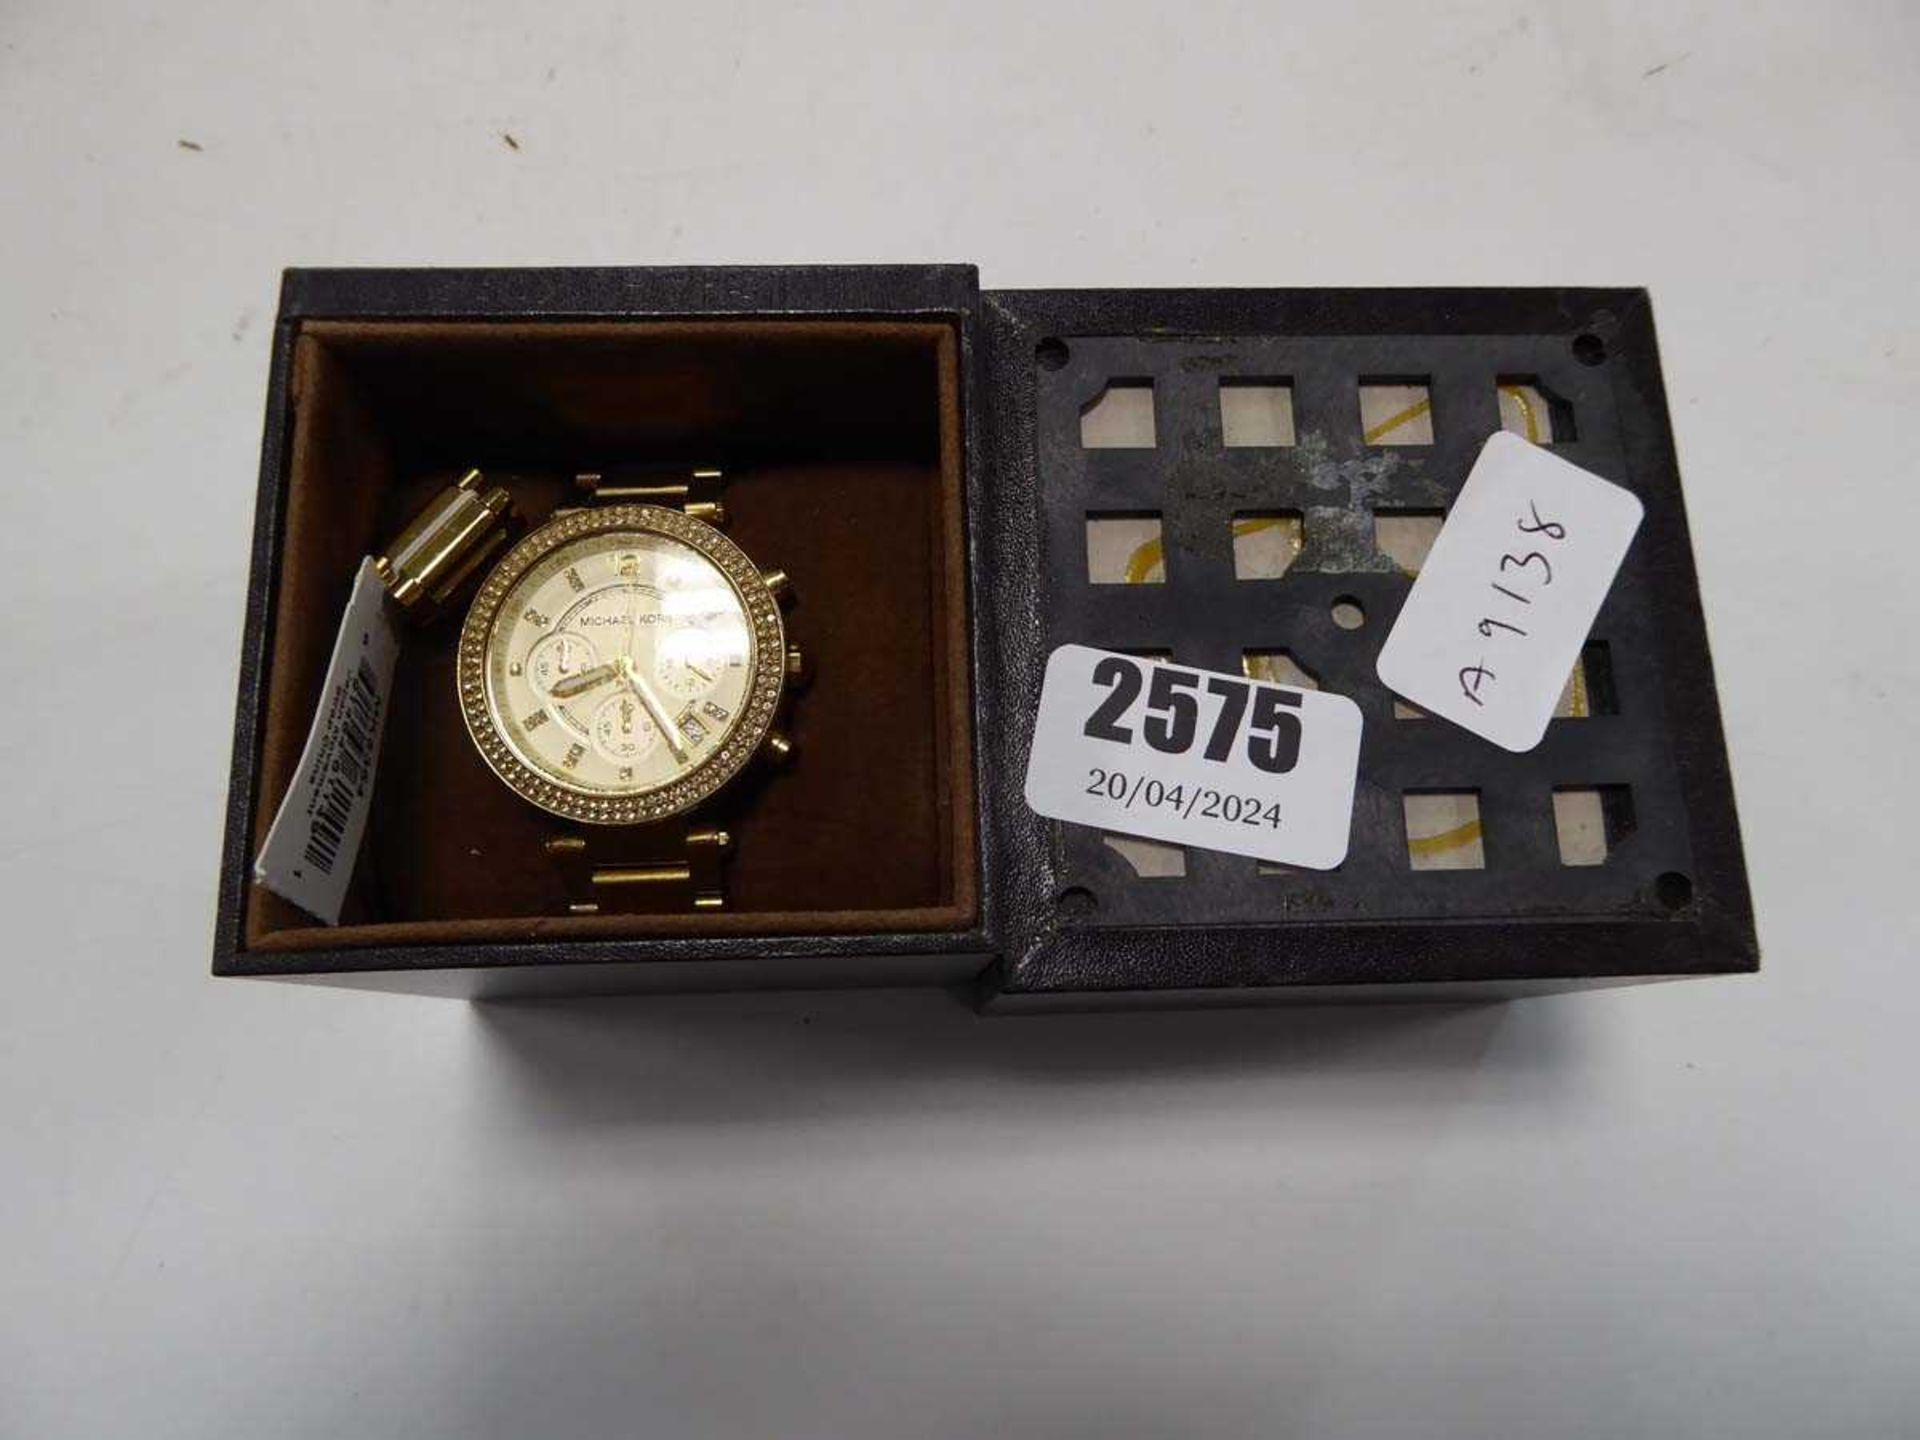 Michael Kors sub-dial watch